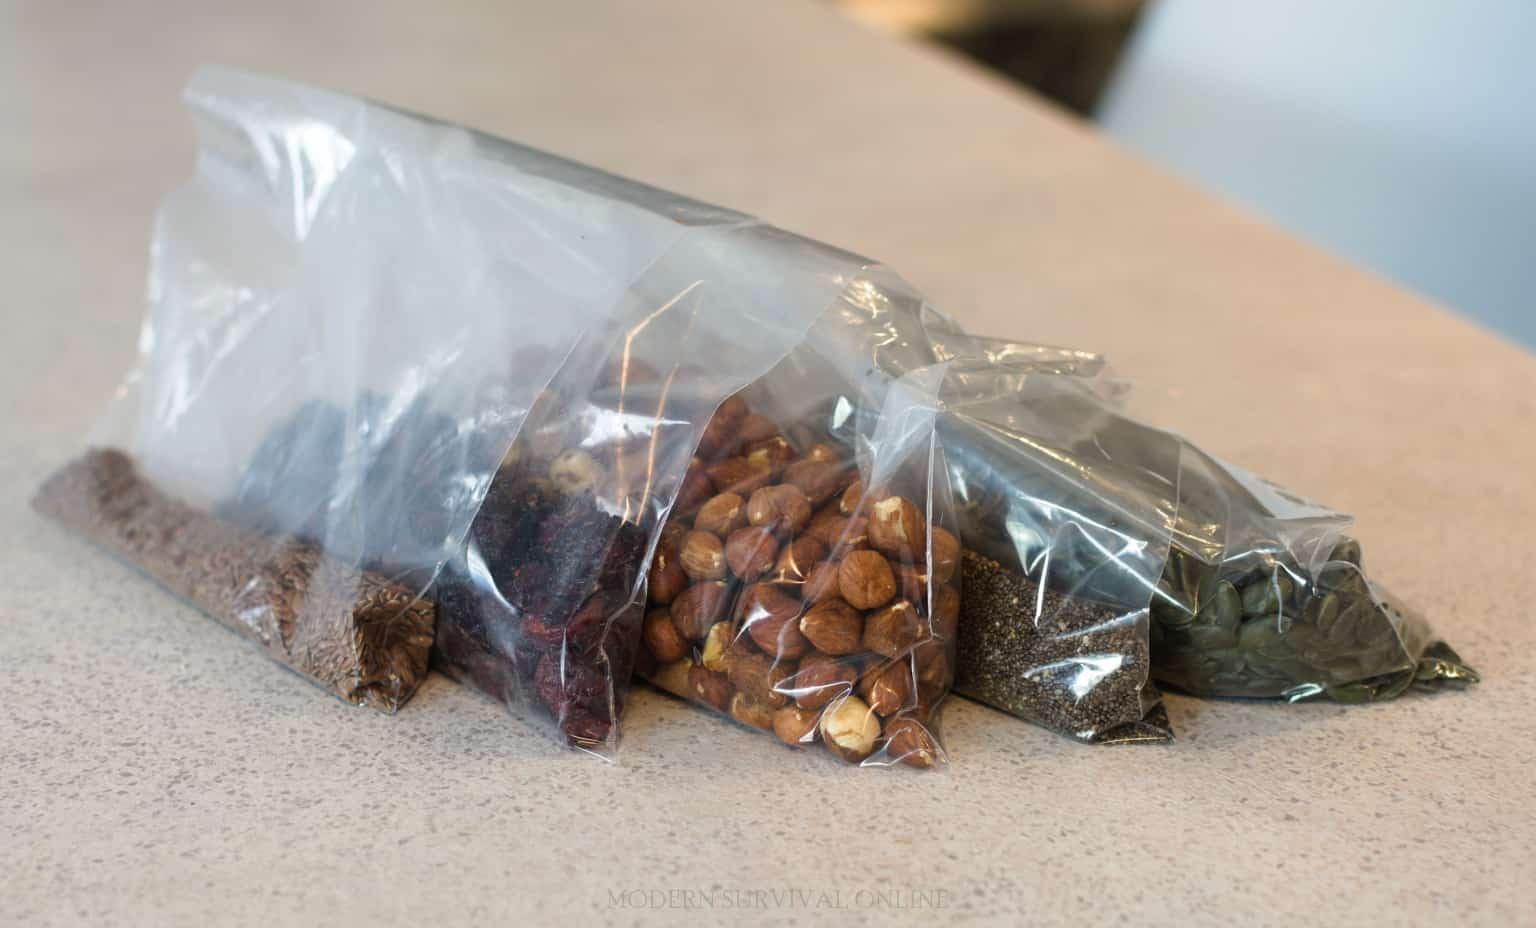 chia, flax seeds, nuts, and pumpkin seeds in Ziplock bags